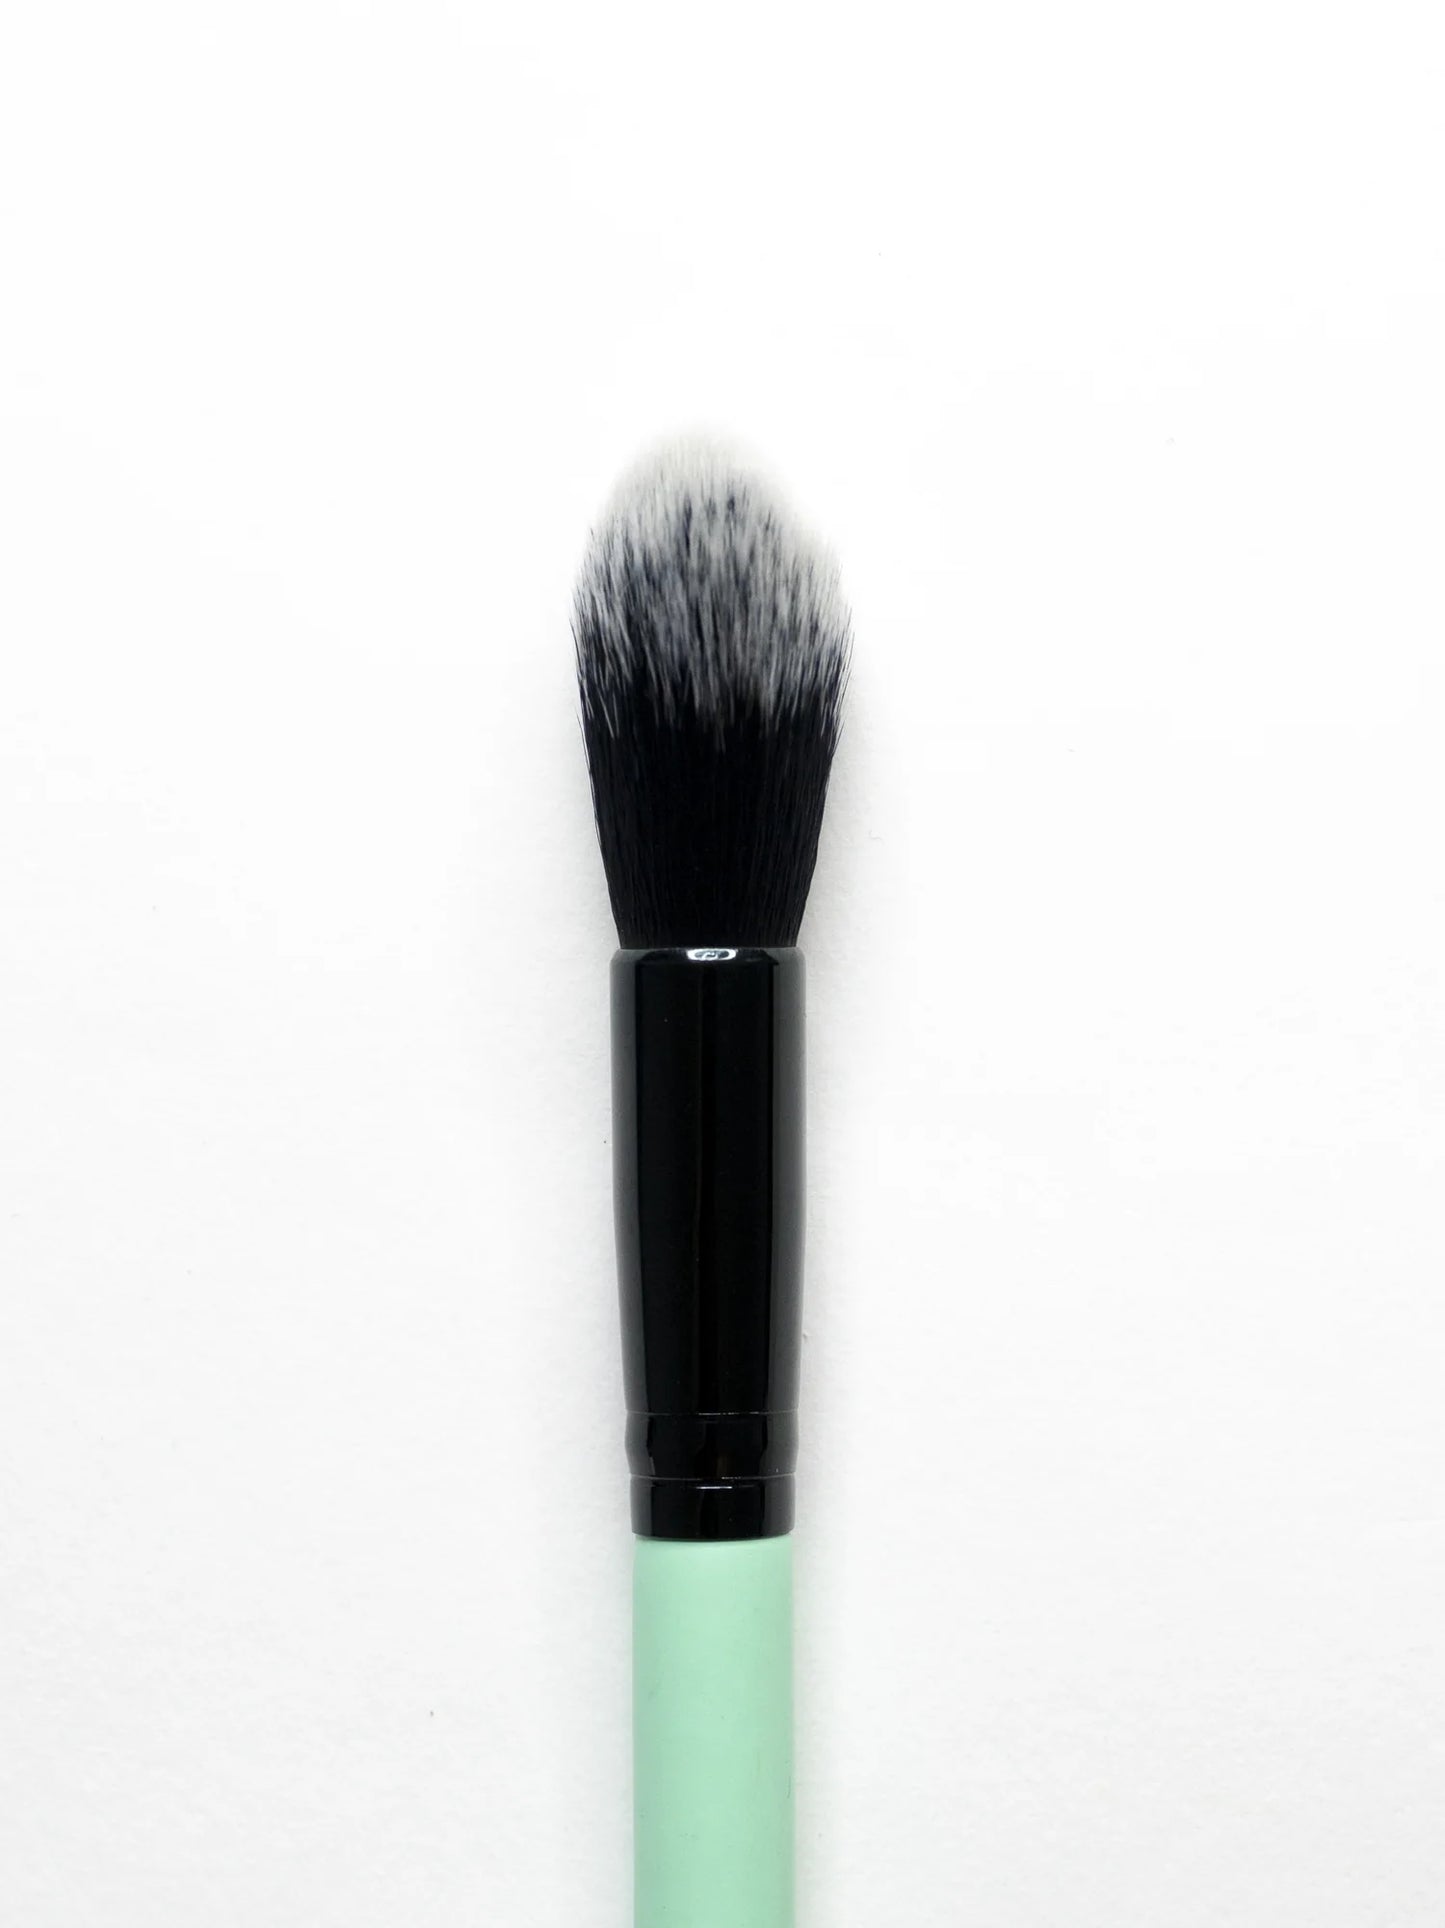 Small Powder Brush 38 Make-up Brush EDY LONDON Turquoise   - EDY LONDON PRODUCTS UK - The Best Makeup Brushes - shop.edy.london